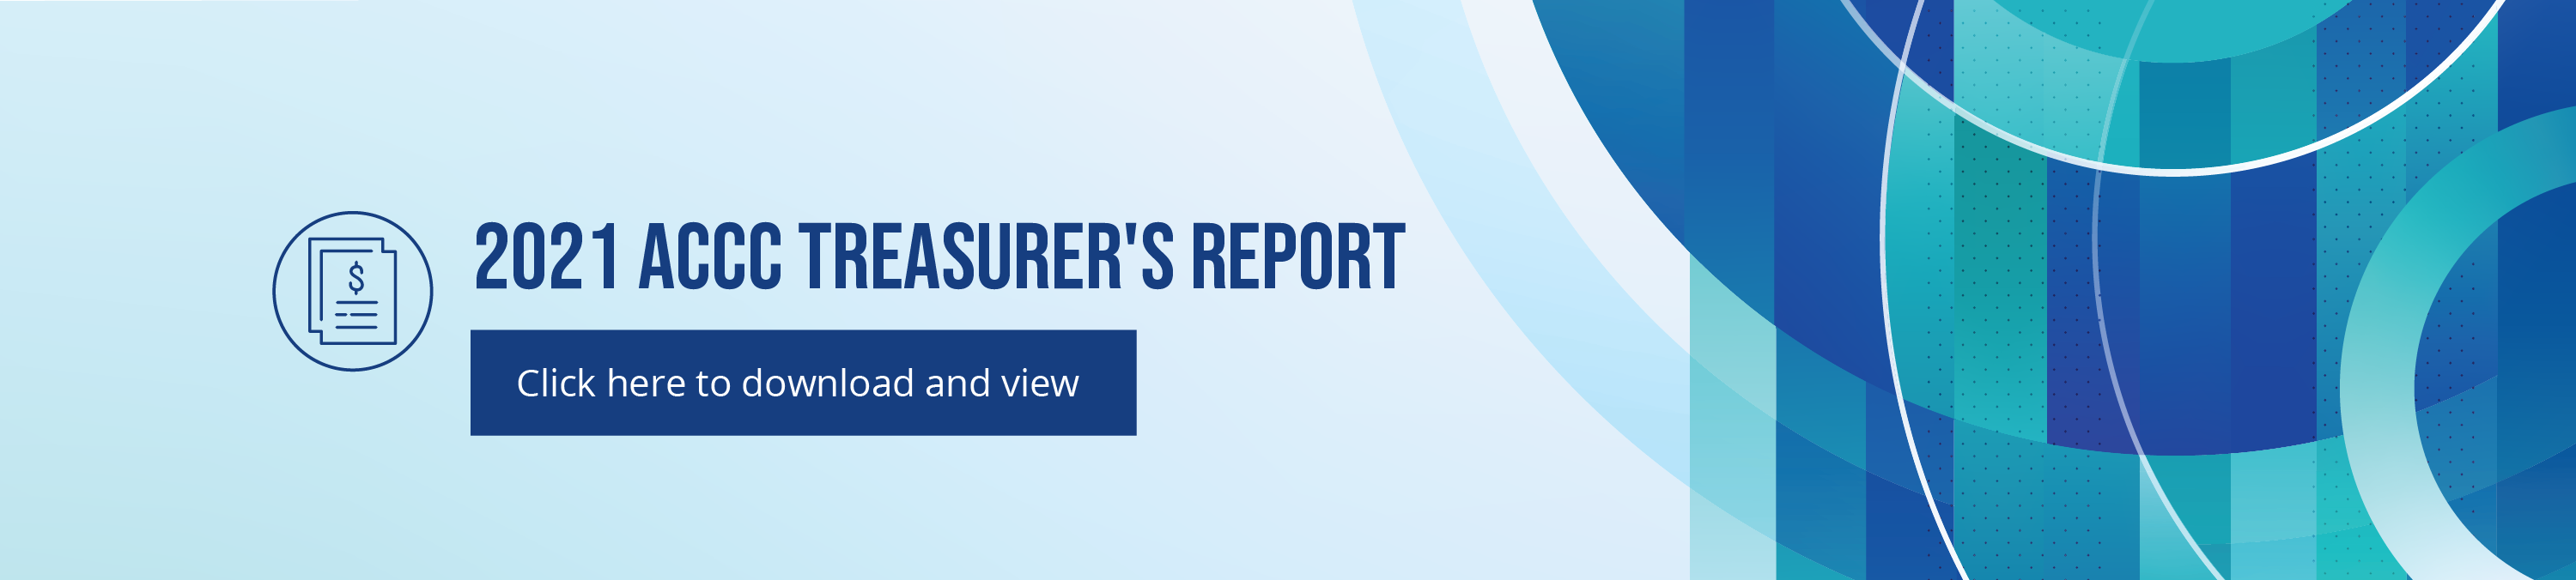 2021 ACCC Treasurer's Report